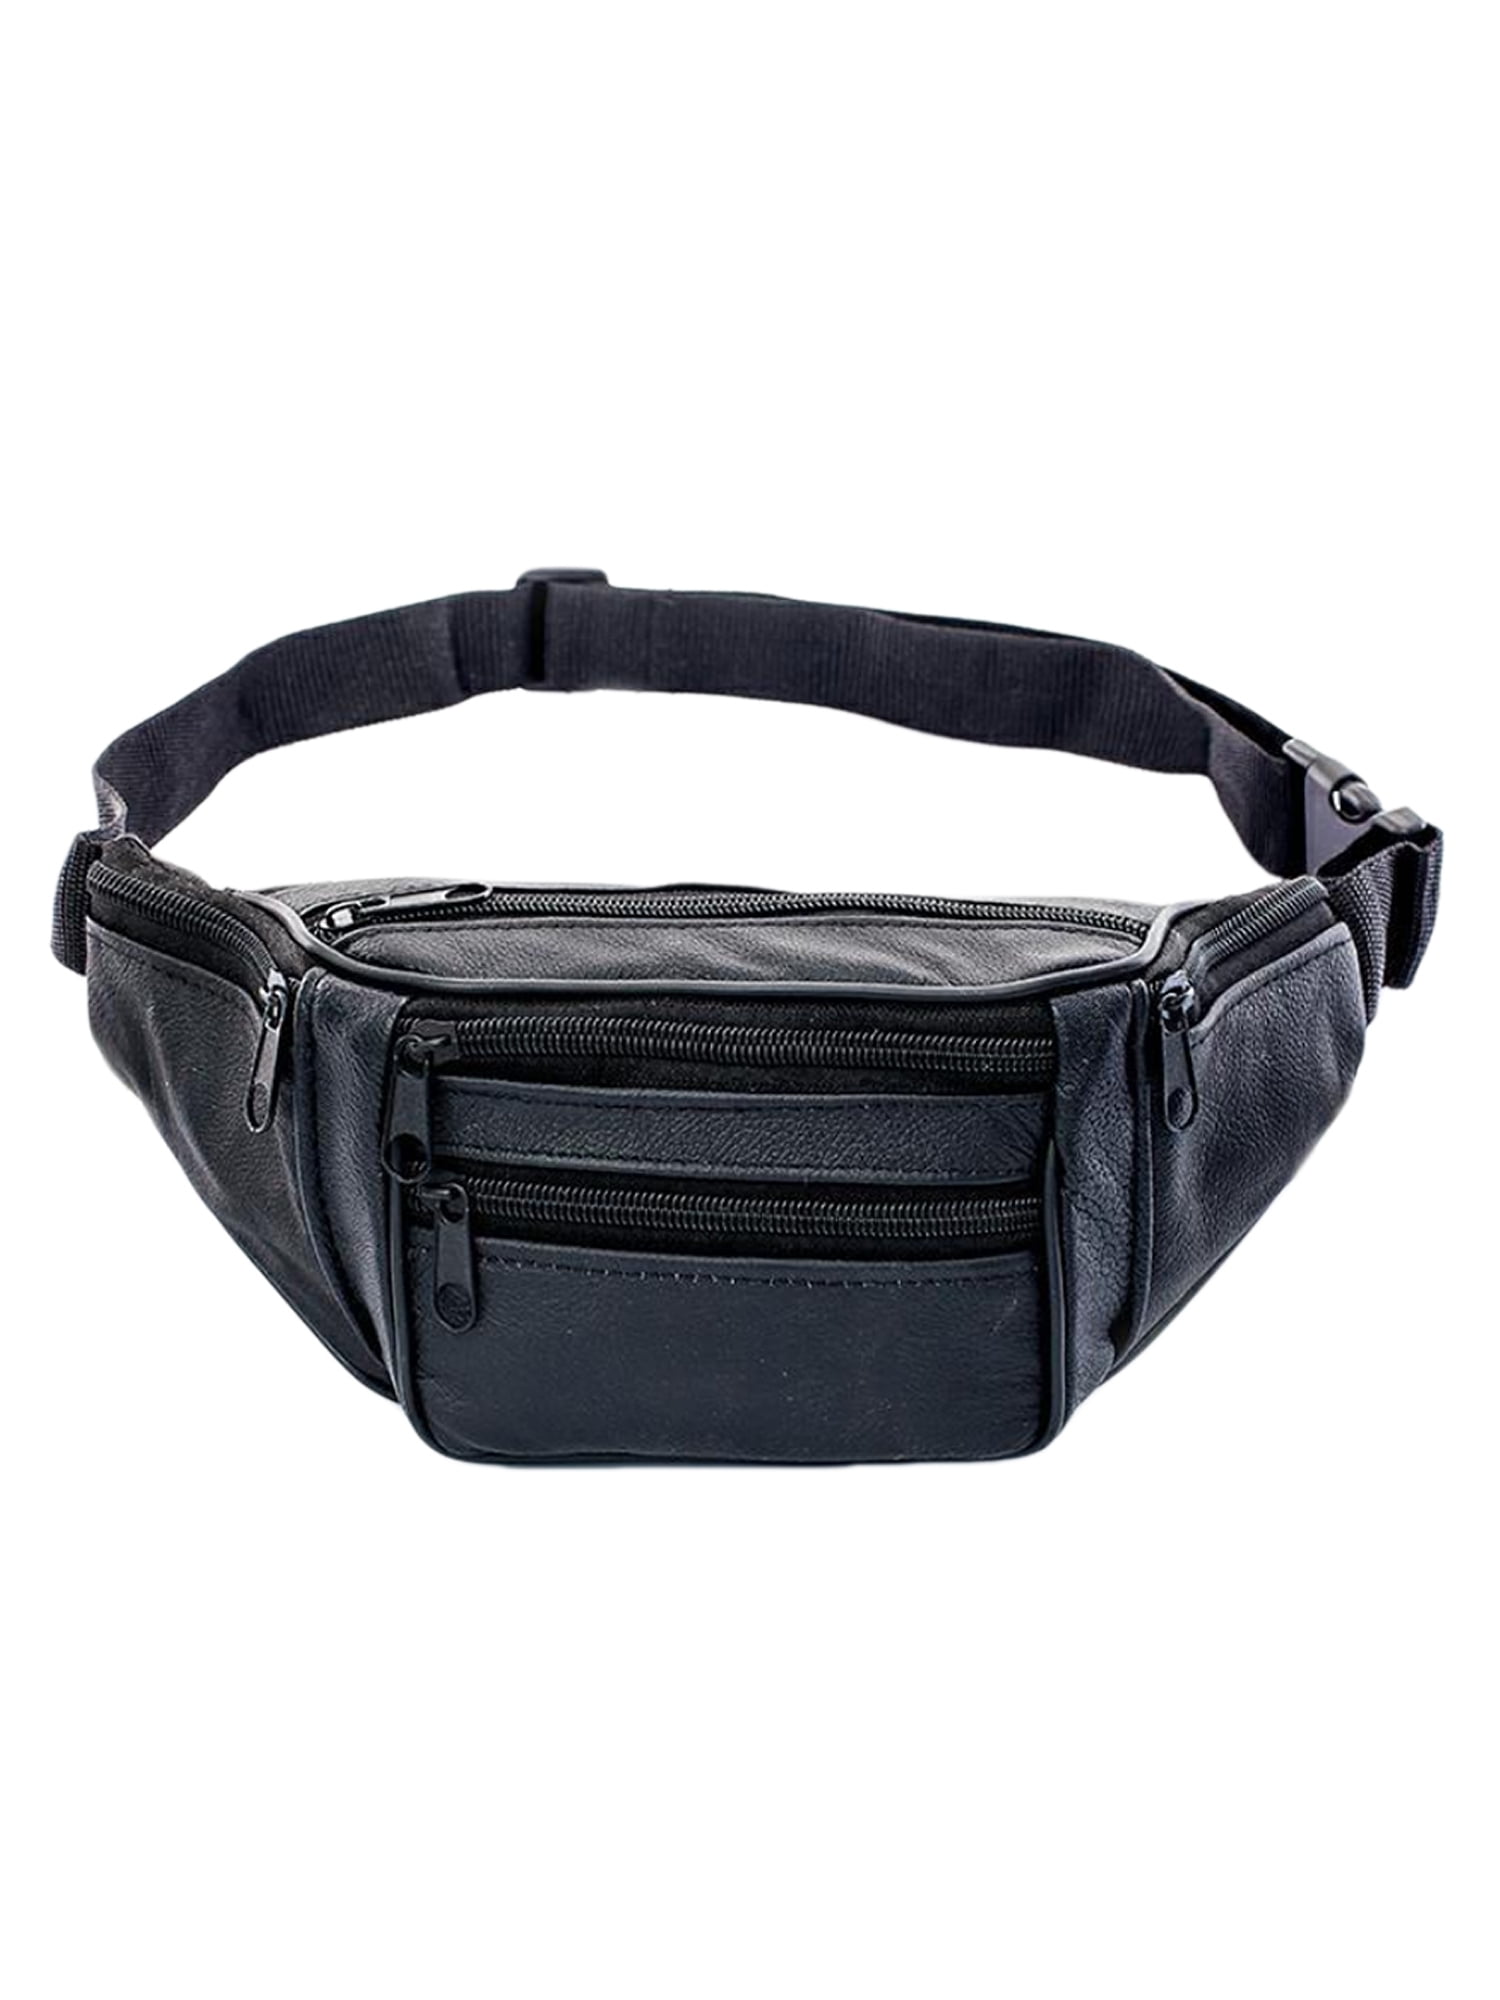 Unisex Waterproof Fanny Pack Belt Waist Hip Bag Shoulder Camp Travel Work Pouch 